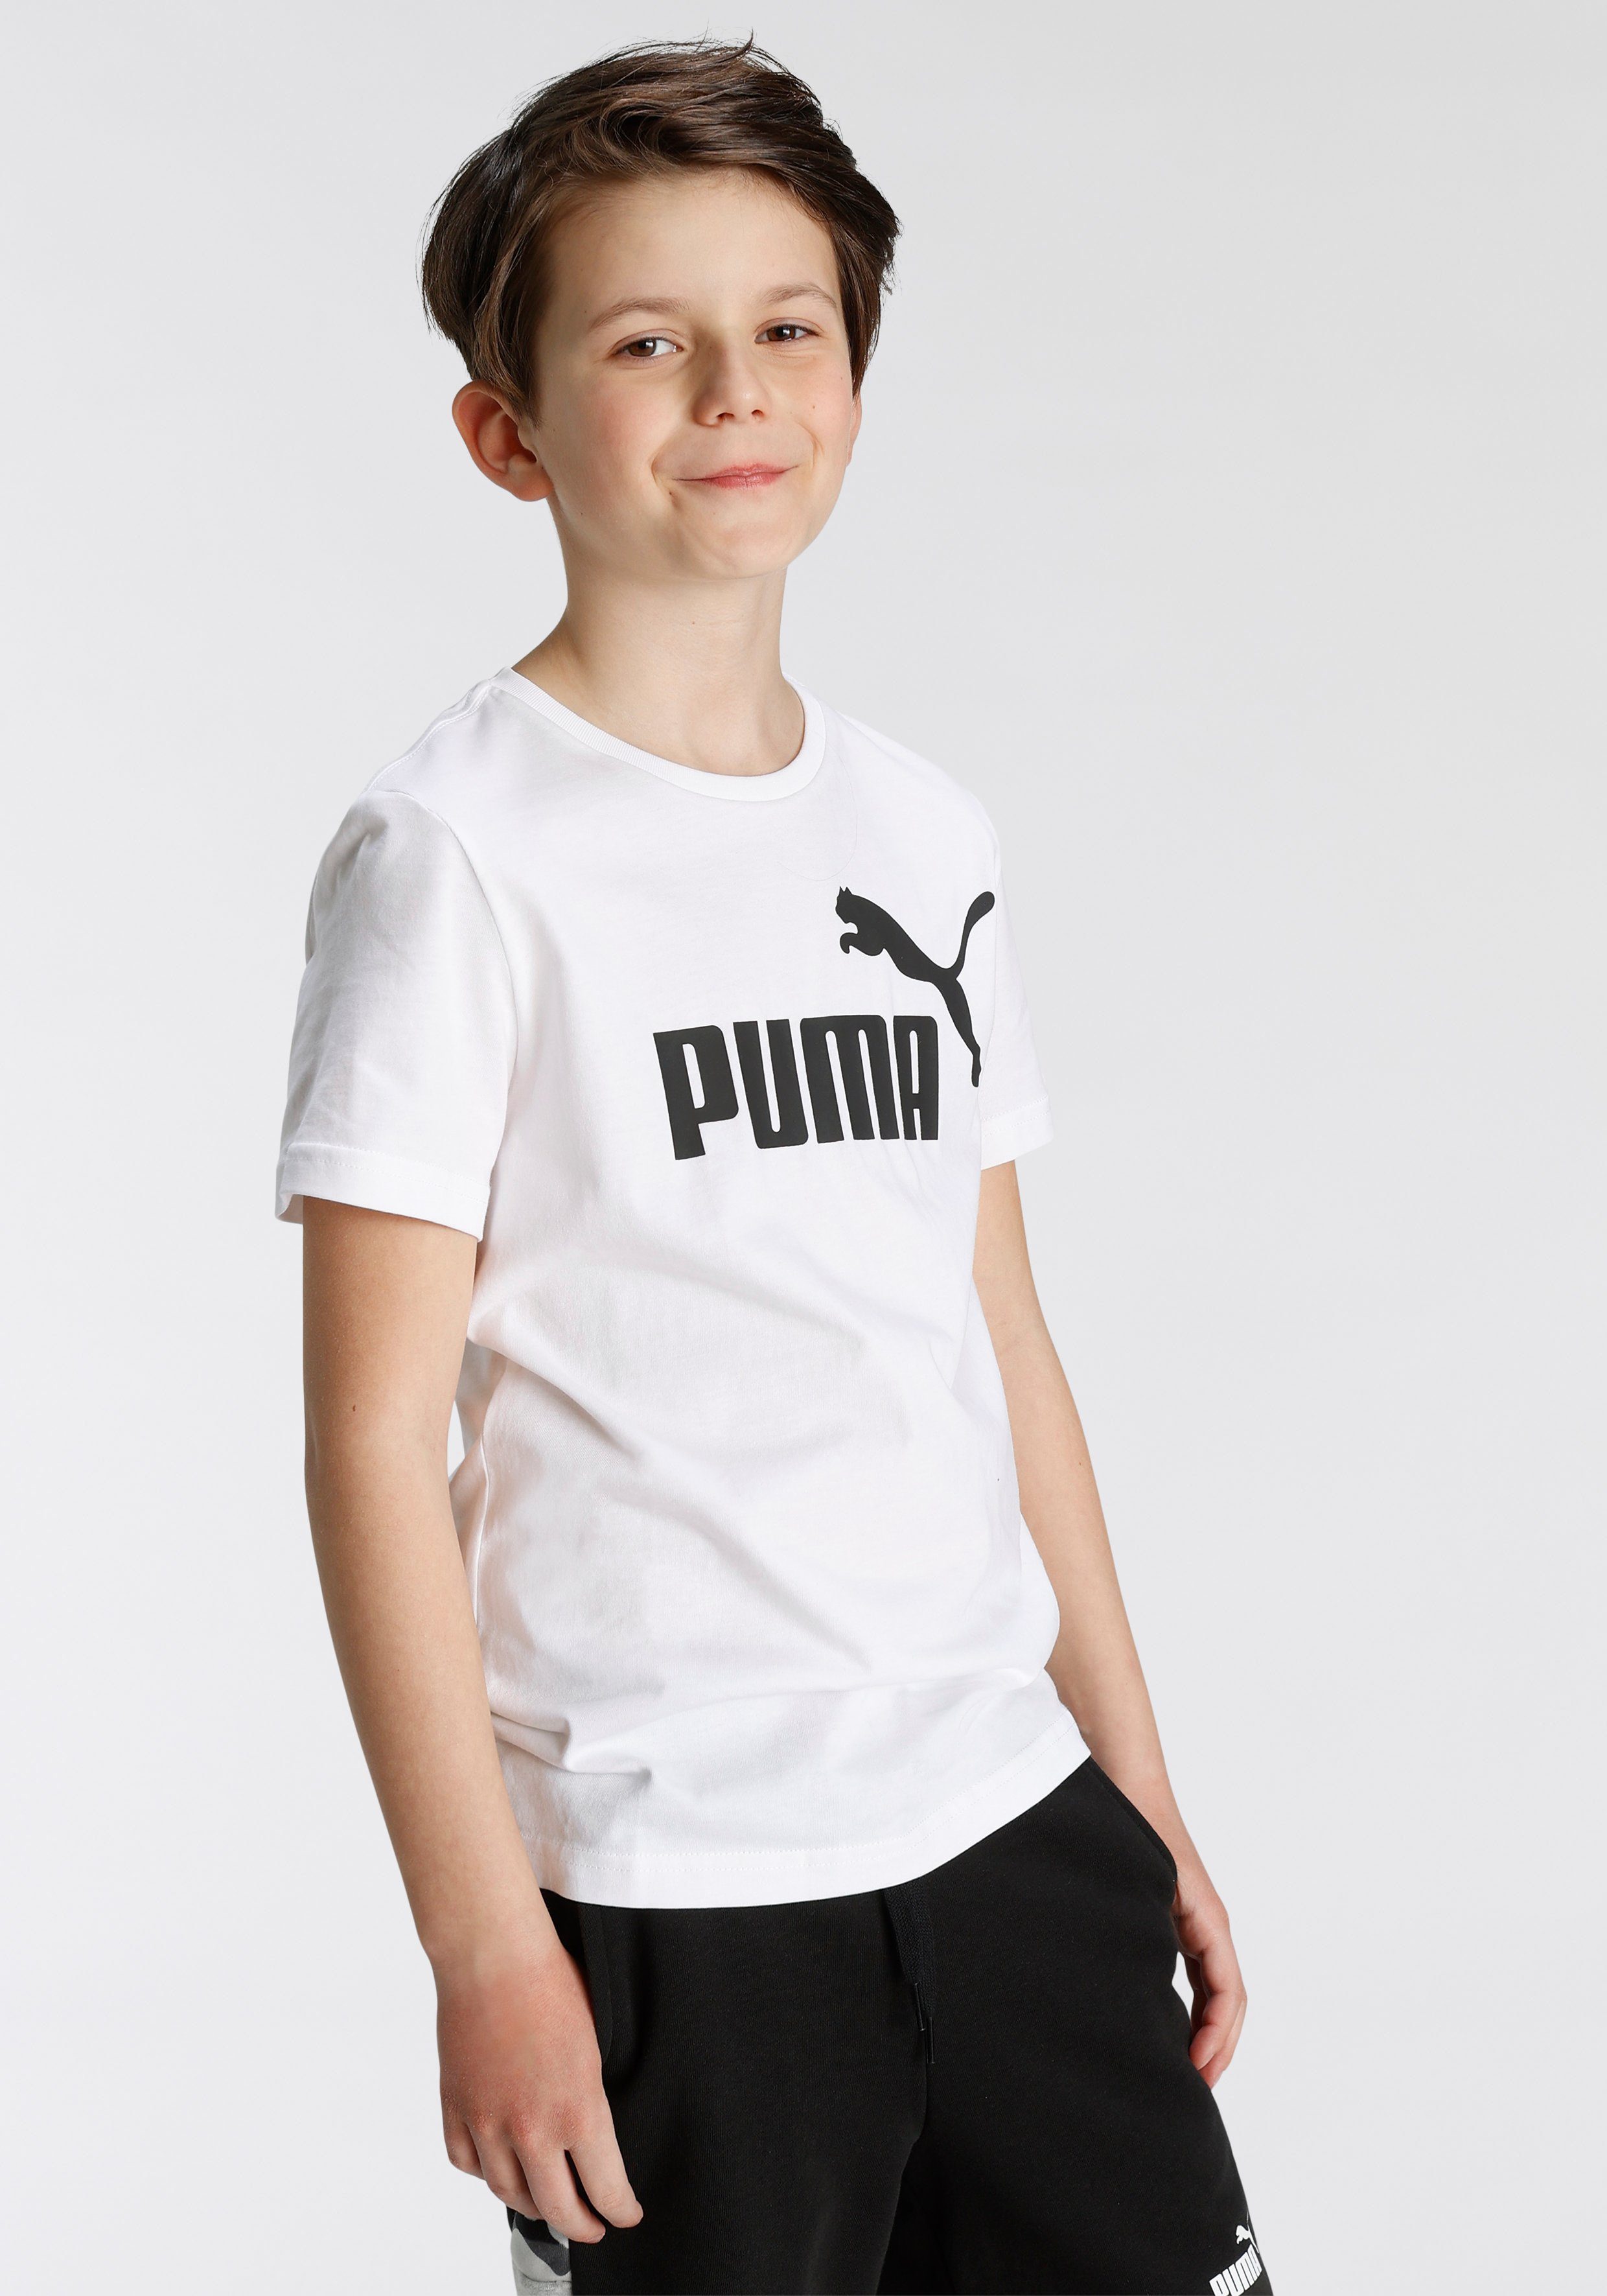 PUMA B ESS Puma TEE White T-Shirt LOGO